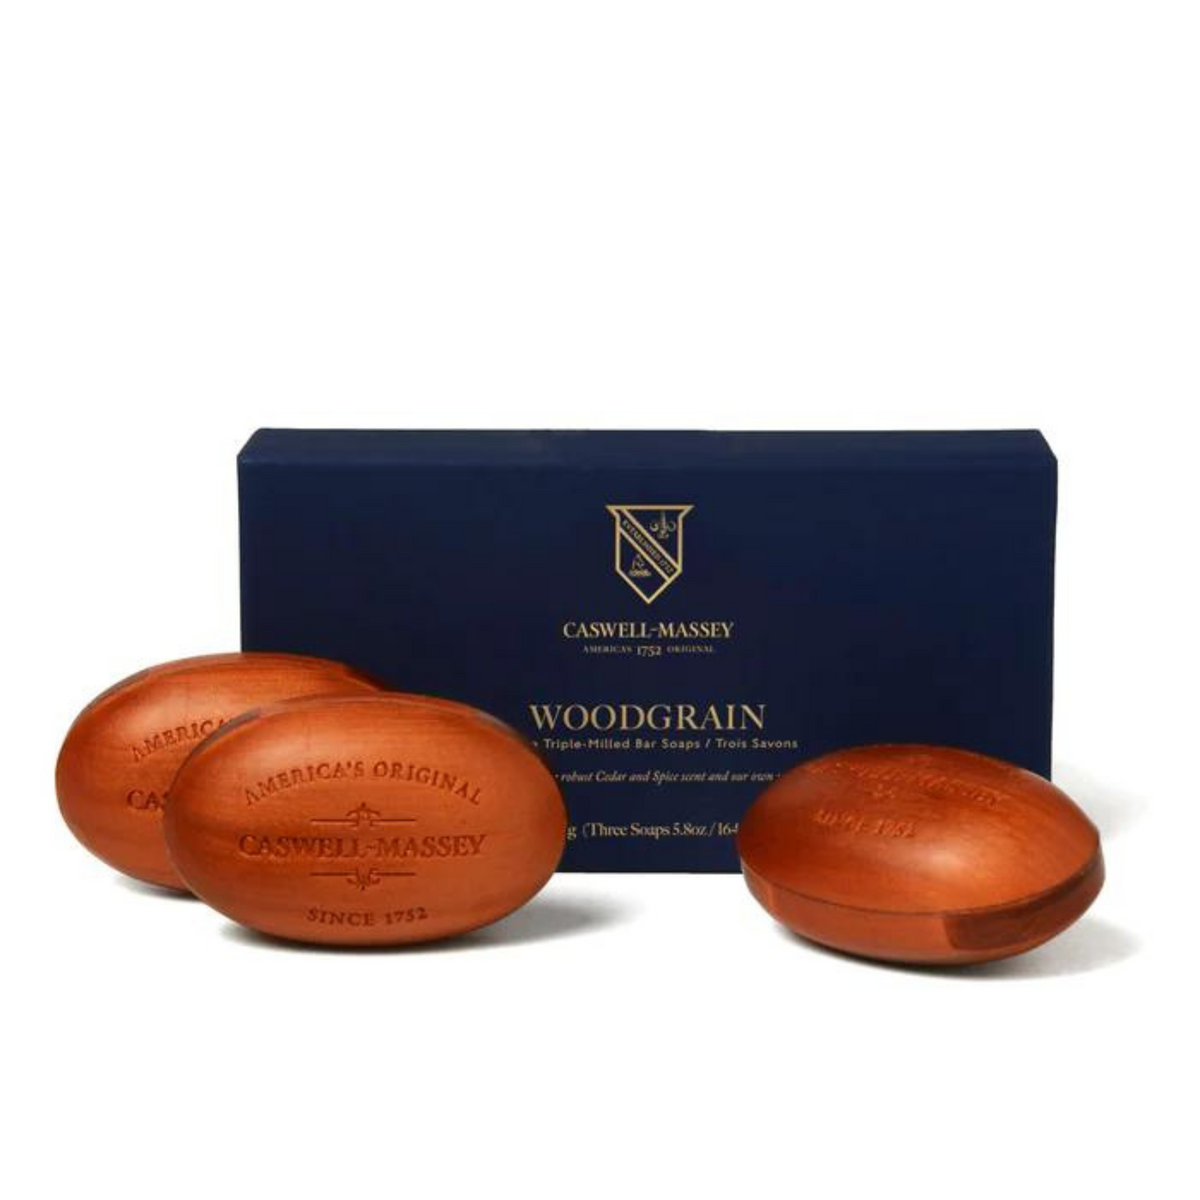 Primary Image of Woodgrain Soap Box of 3